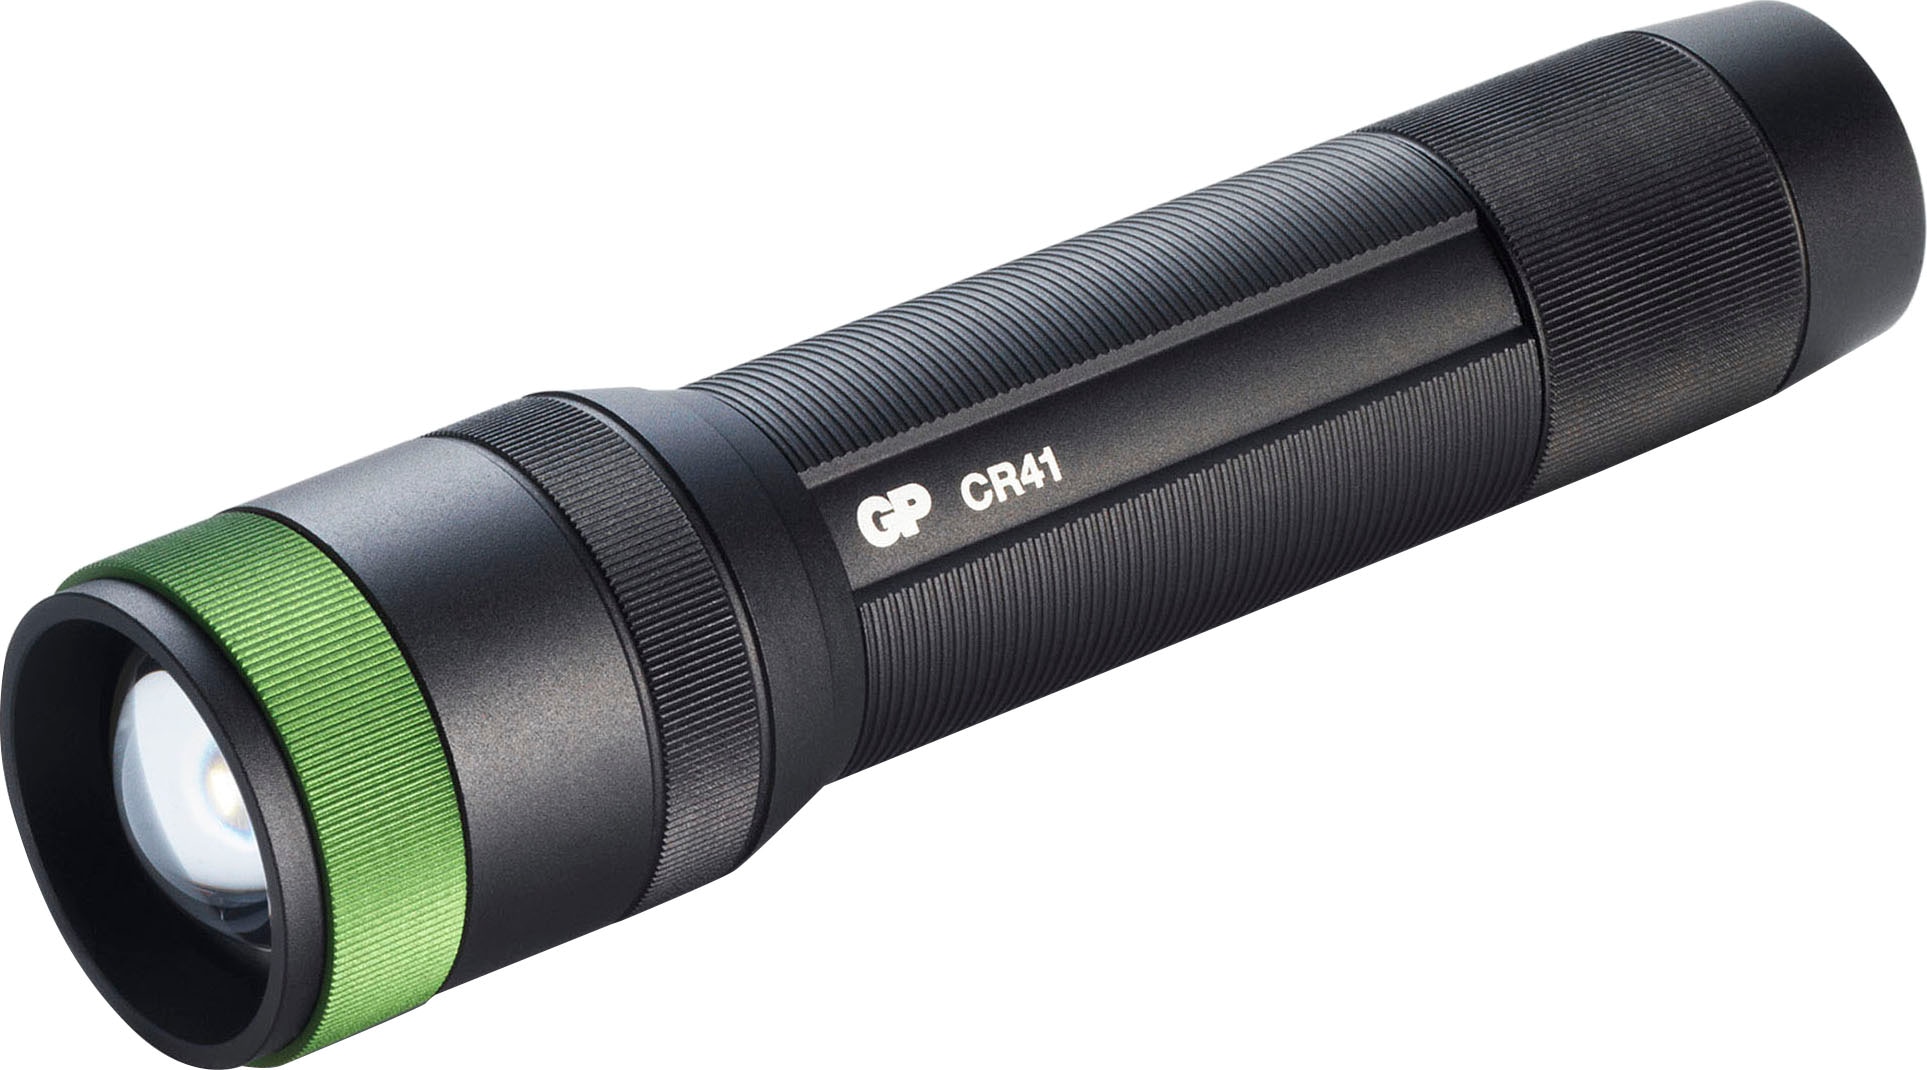 GP Batteries Taschenlampe »GP Discovery CR41 CRE LED Taschenlampe«, 650 Lumen, USB...